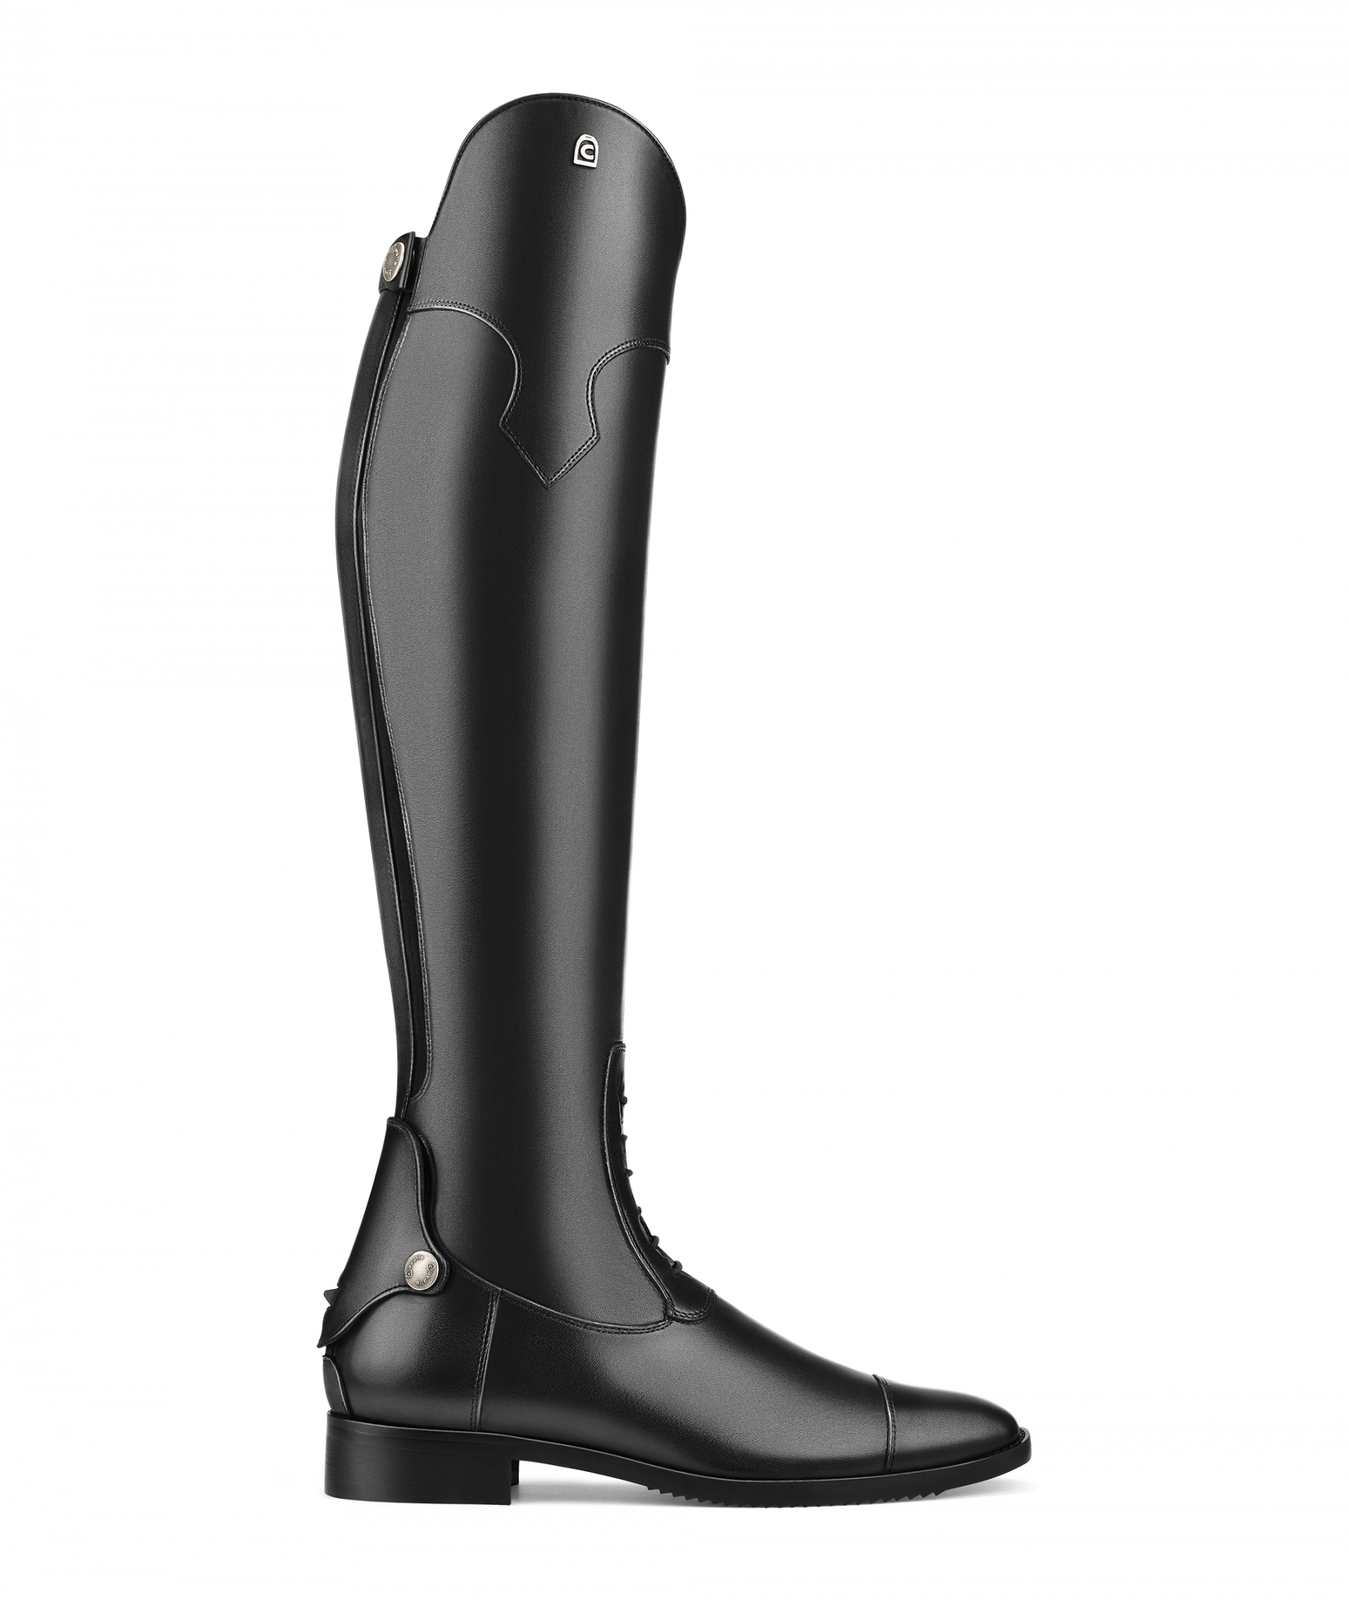 Cavallo varius 5 H49 W36 jumping boots riding boots Black